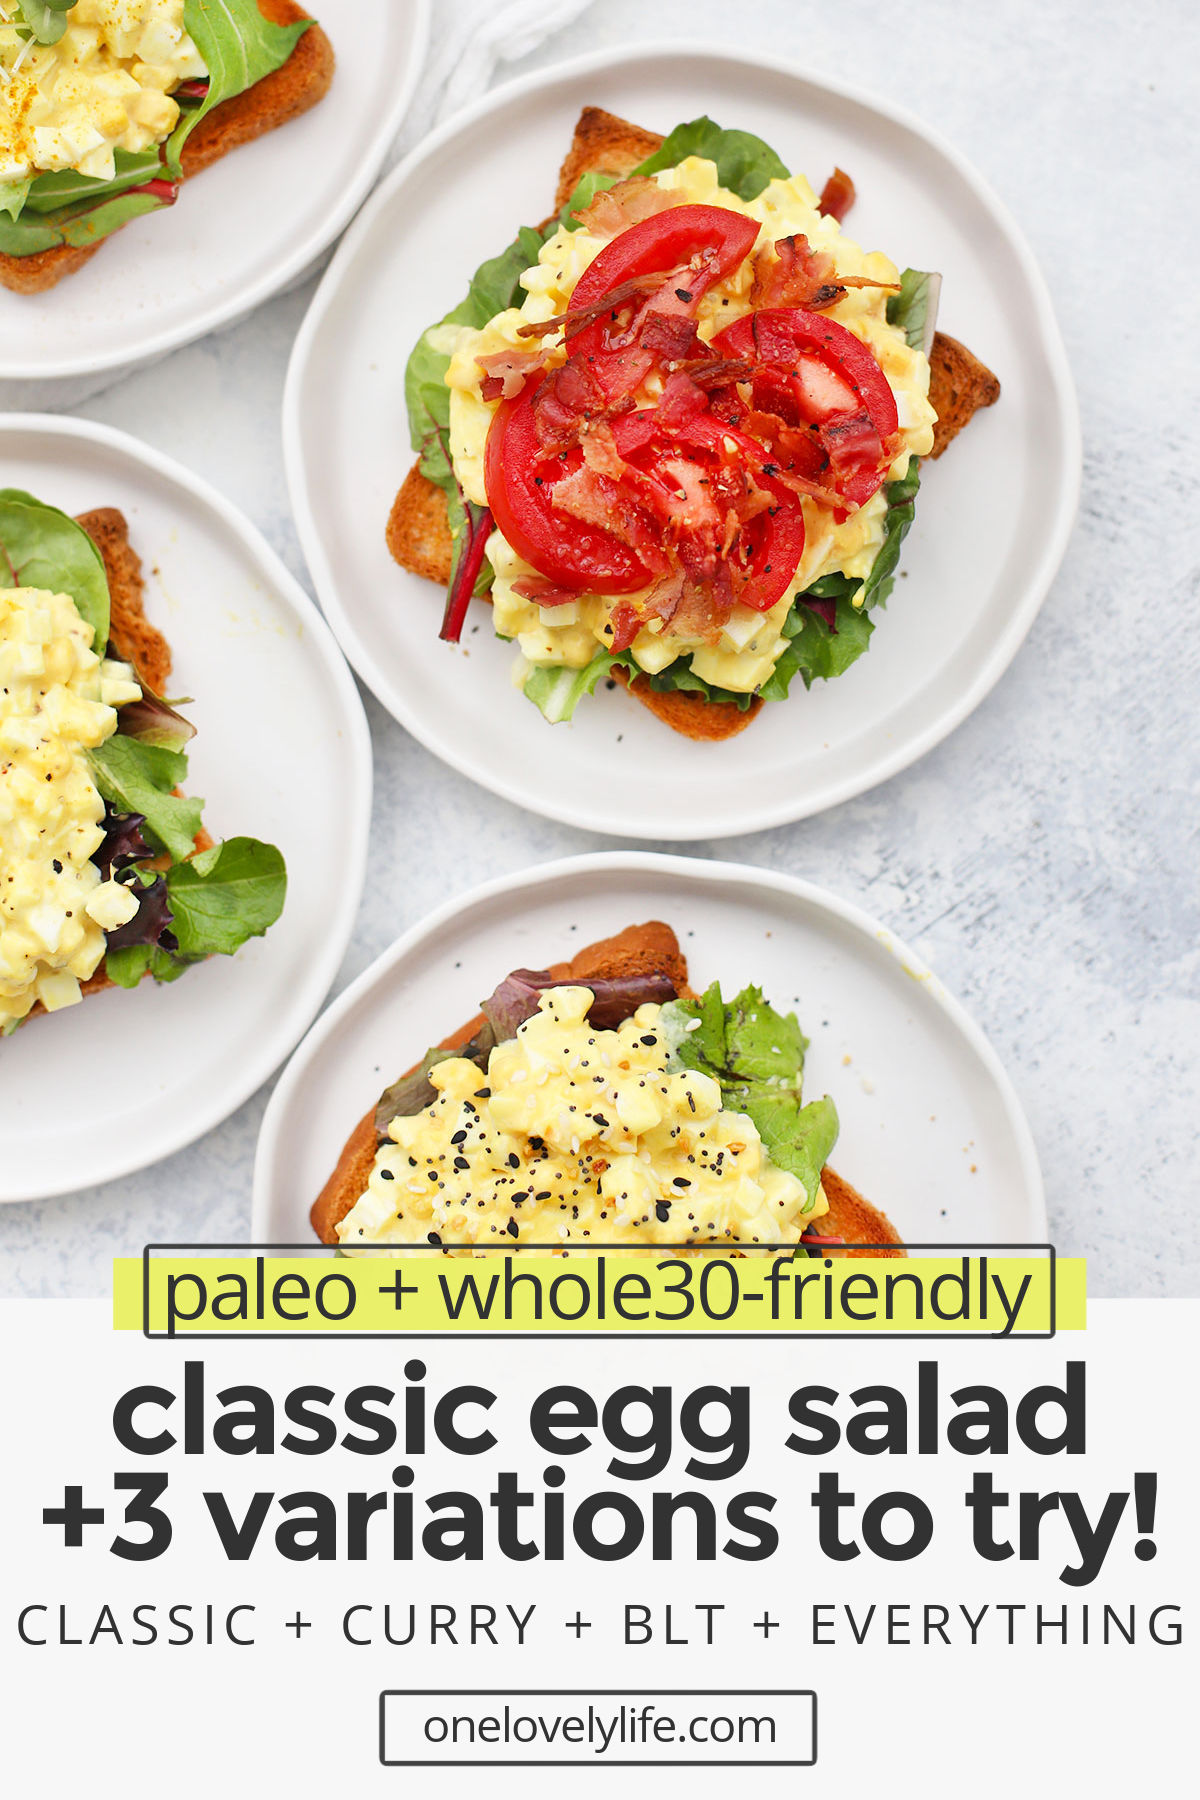 Classic Egg Salad + 3 Yummy Variations to Try - Simple and classic, this egg salad is such a yummy lunch! Don't miss 3 of my favorite delicious variations below! (Gluten free, paleo) // BLT Egg Salad Recipe // Everything Bagel Seasoning Egg Salad // Egg Salad on Toast // Curry Egg Salad // Paleo Egg Salad // Gluten Free Egg Salad #eggsalad #paleo #glutenfree #dairyfree #hardboiledeggs